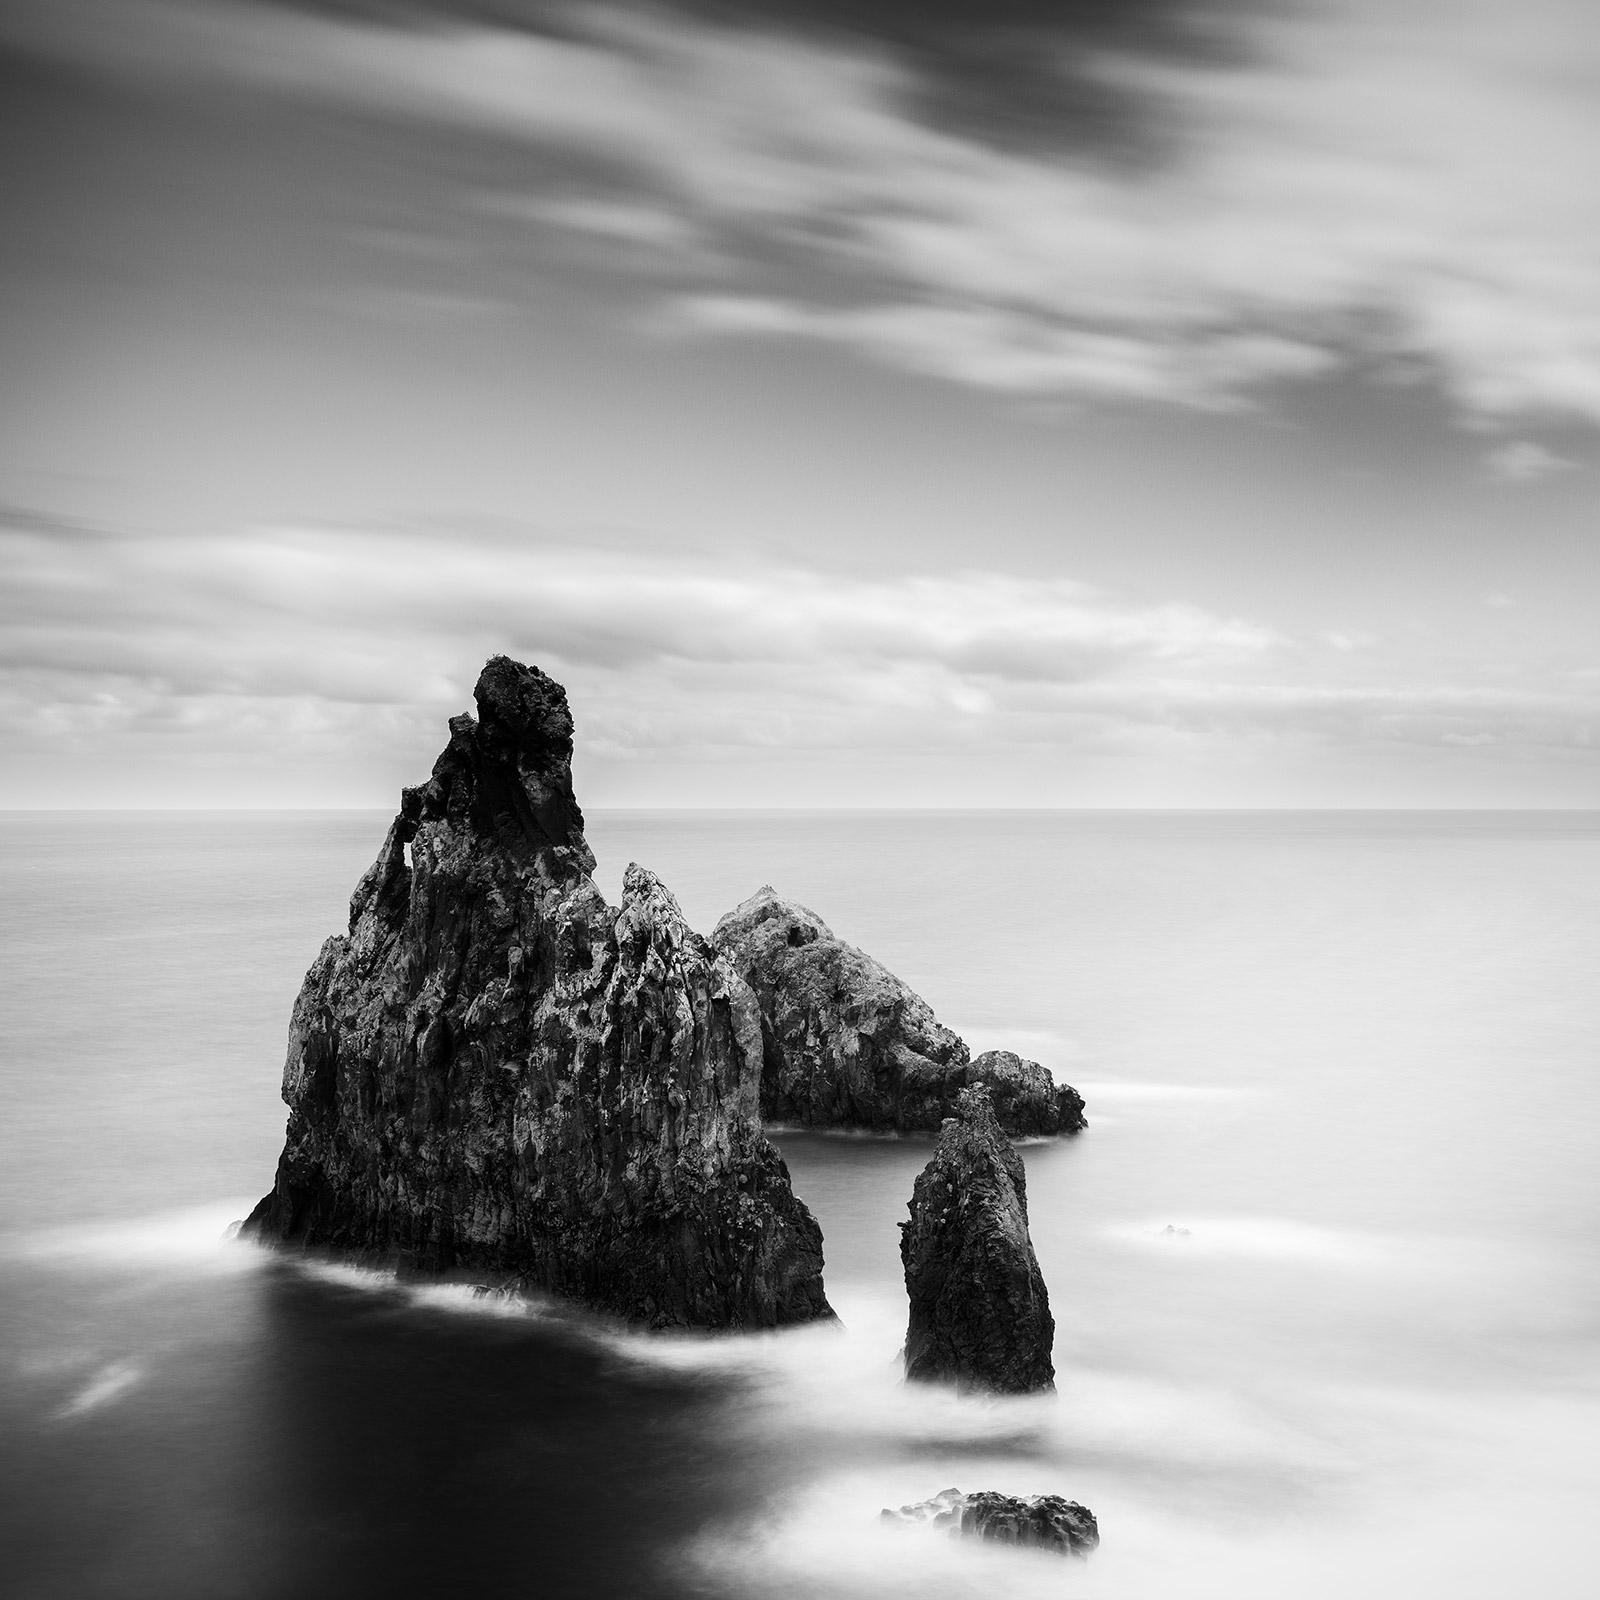 Landscape Photograph Gerald Berghammer - Ribeira da Janela Rocks, shoreline, black and white art waterscape photography